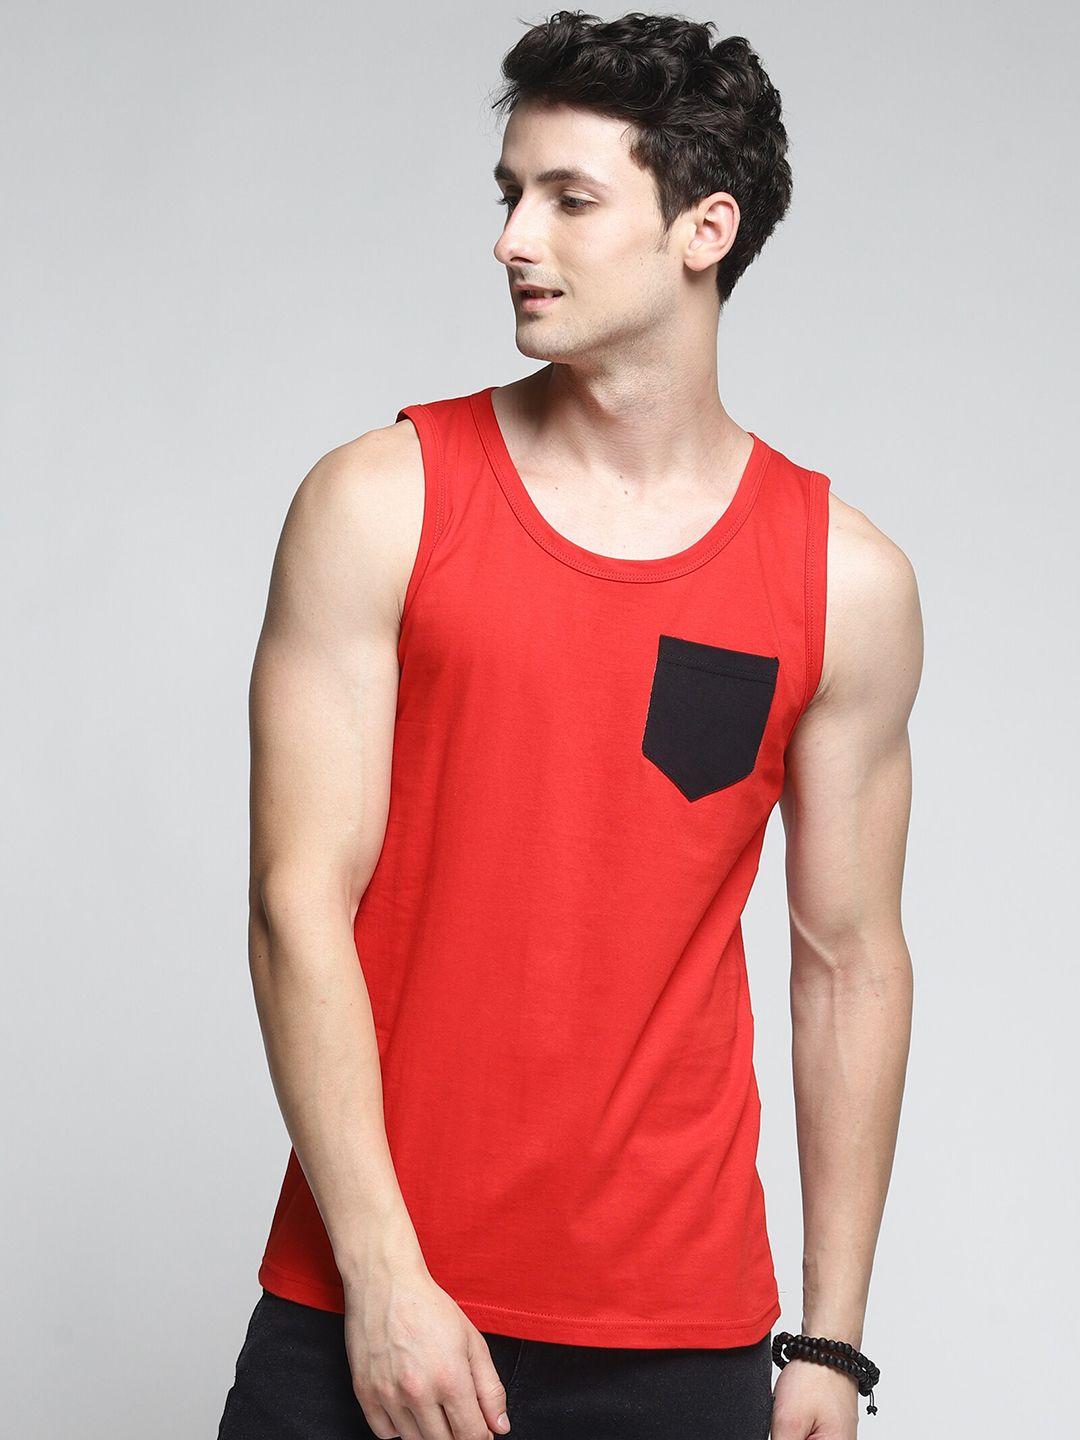 trends-tower-men-red-&-black-solid-cotton-innerwear-basic-vests